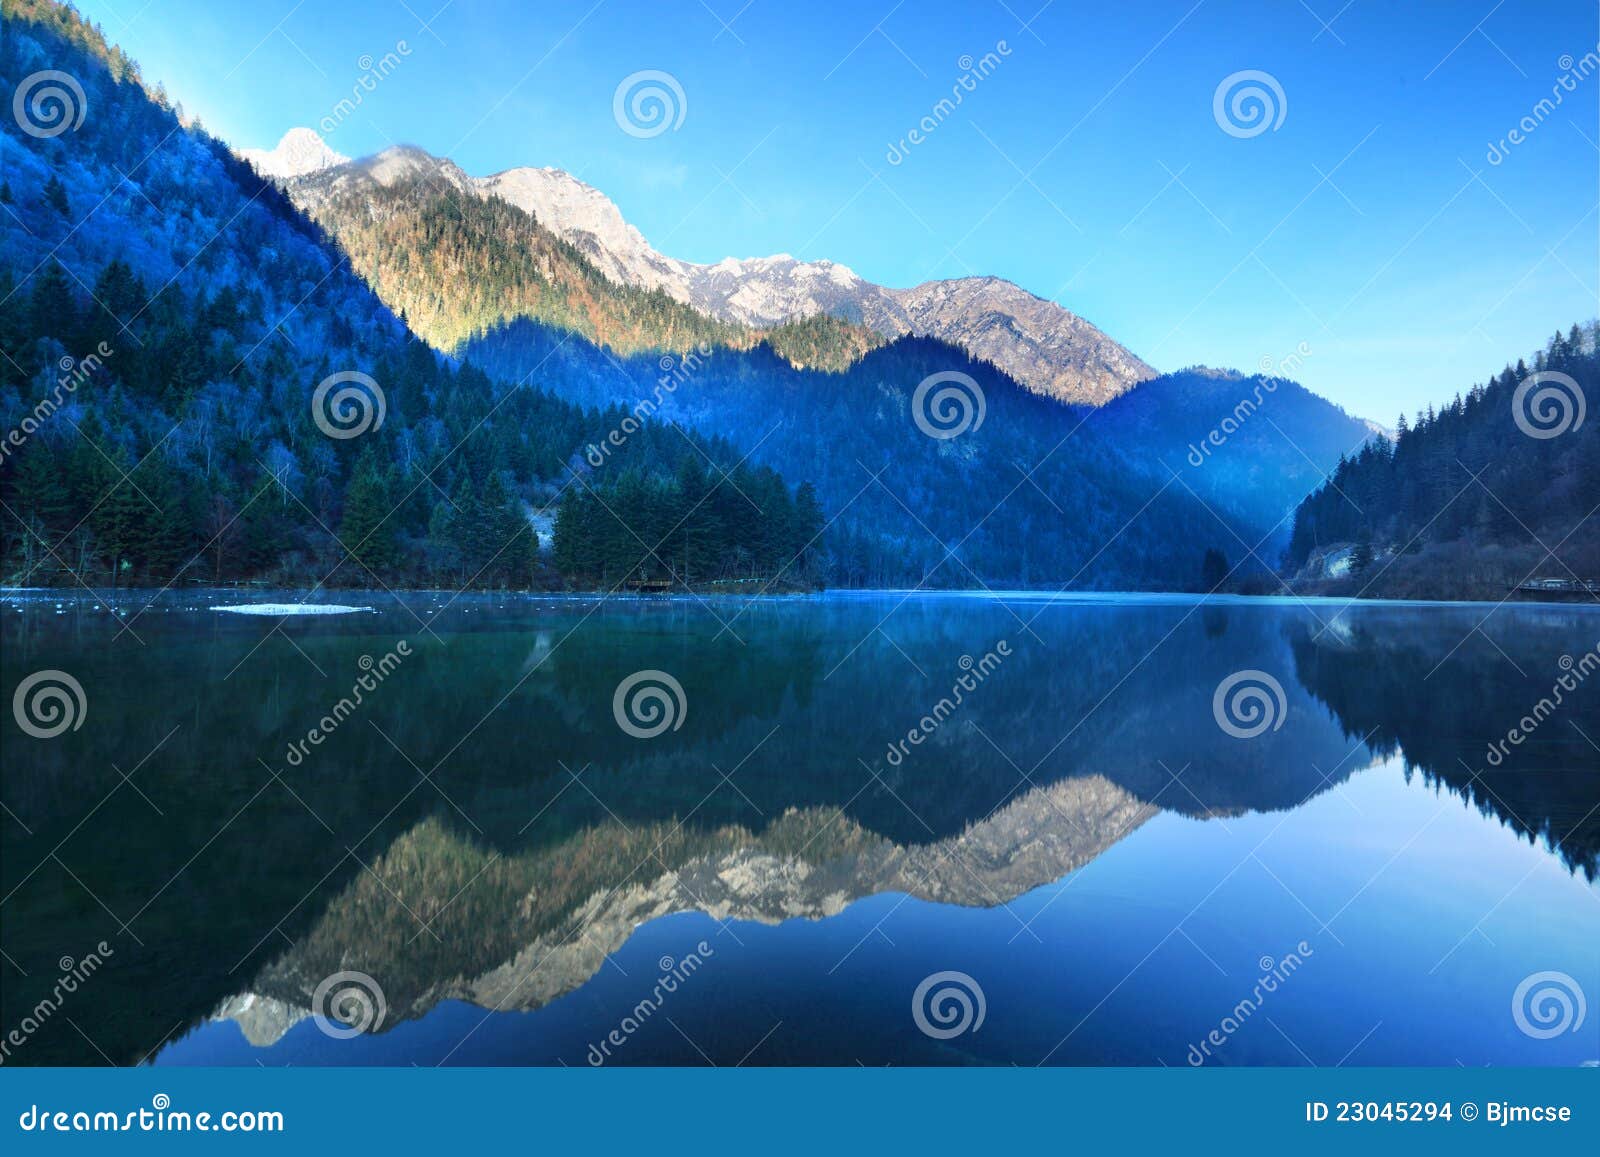 Beautiful Lake In Jiuzhai Stock Photo Image Of Forest 23045294